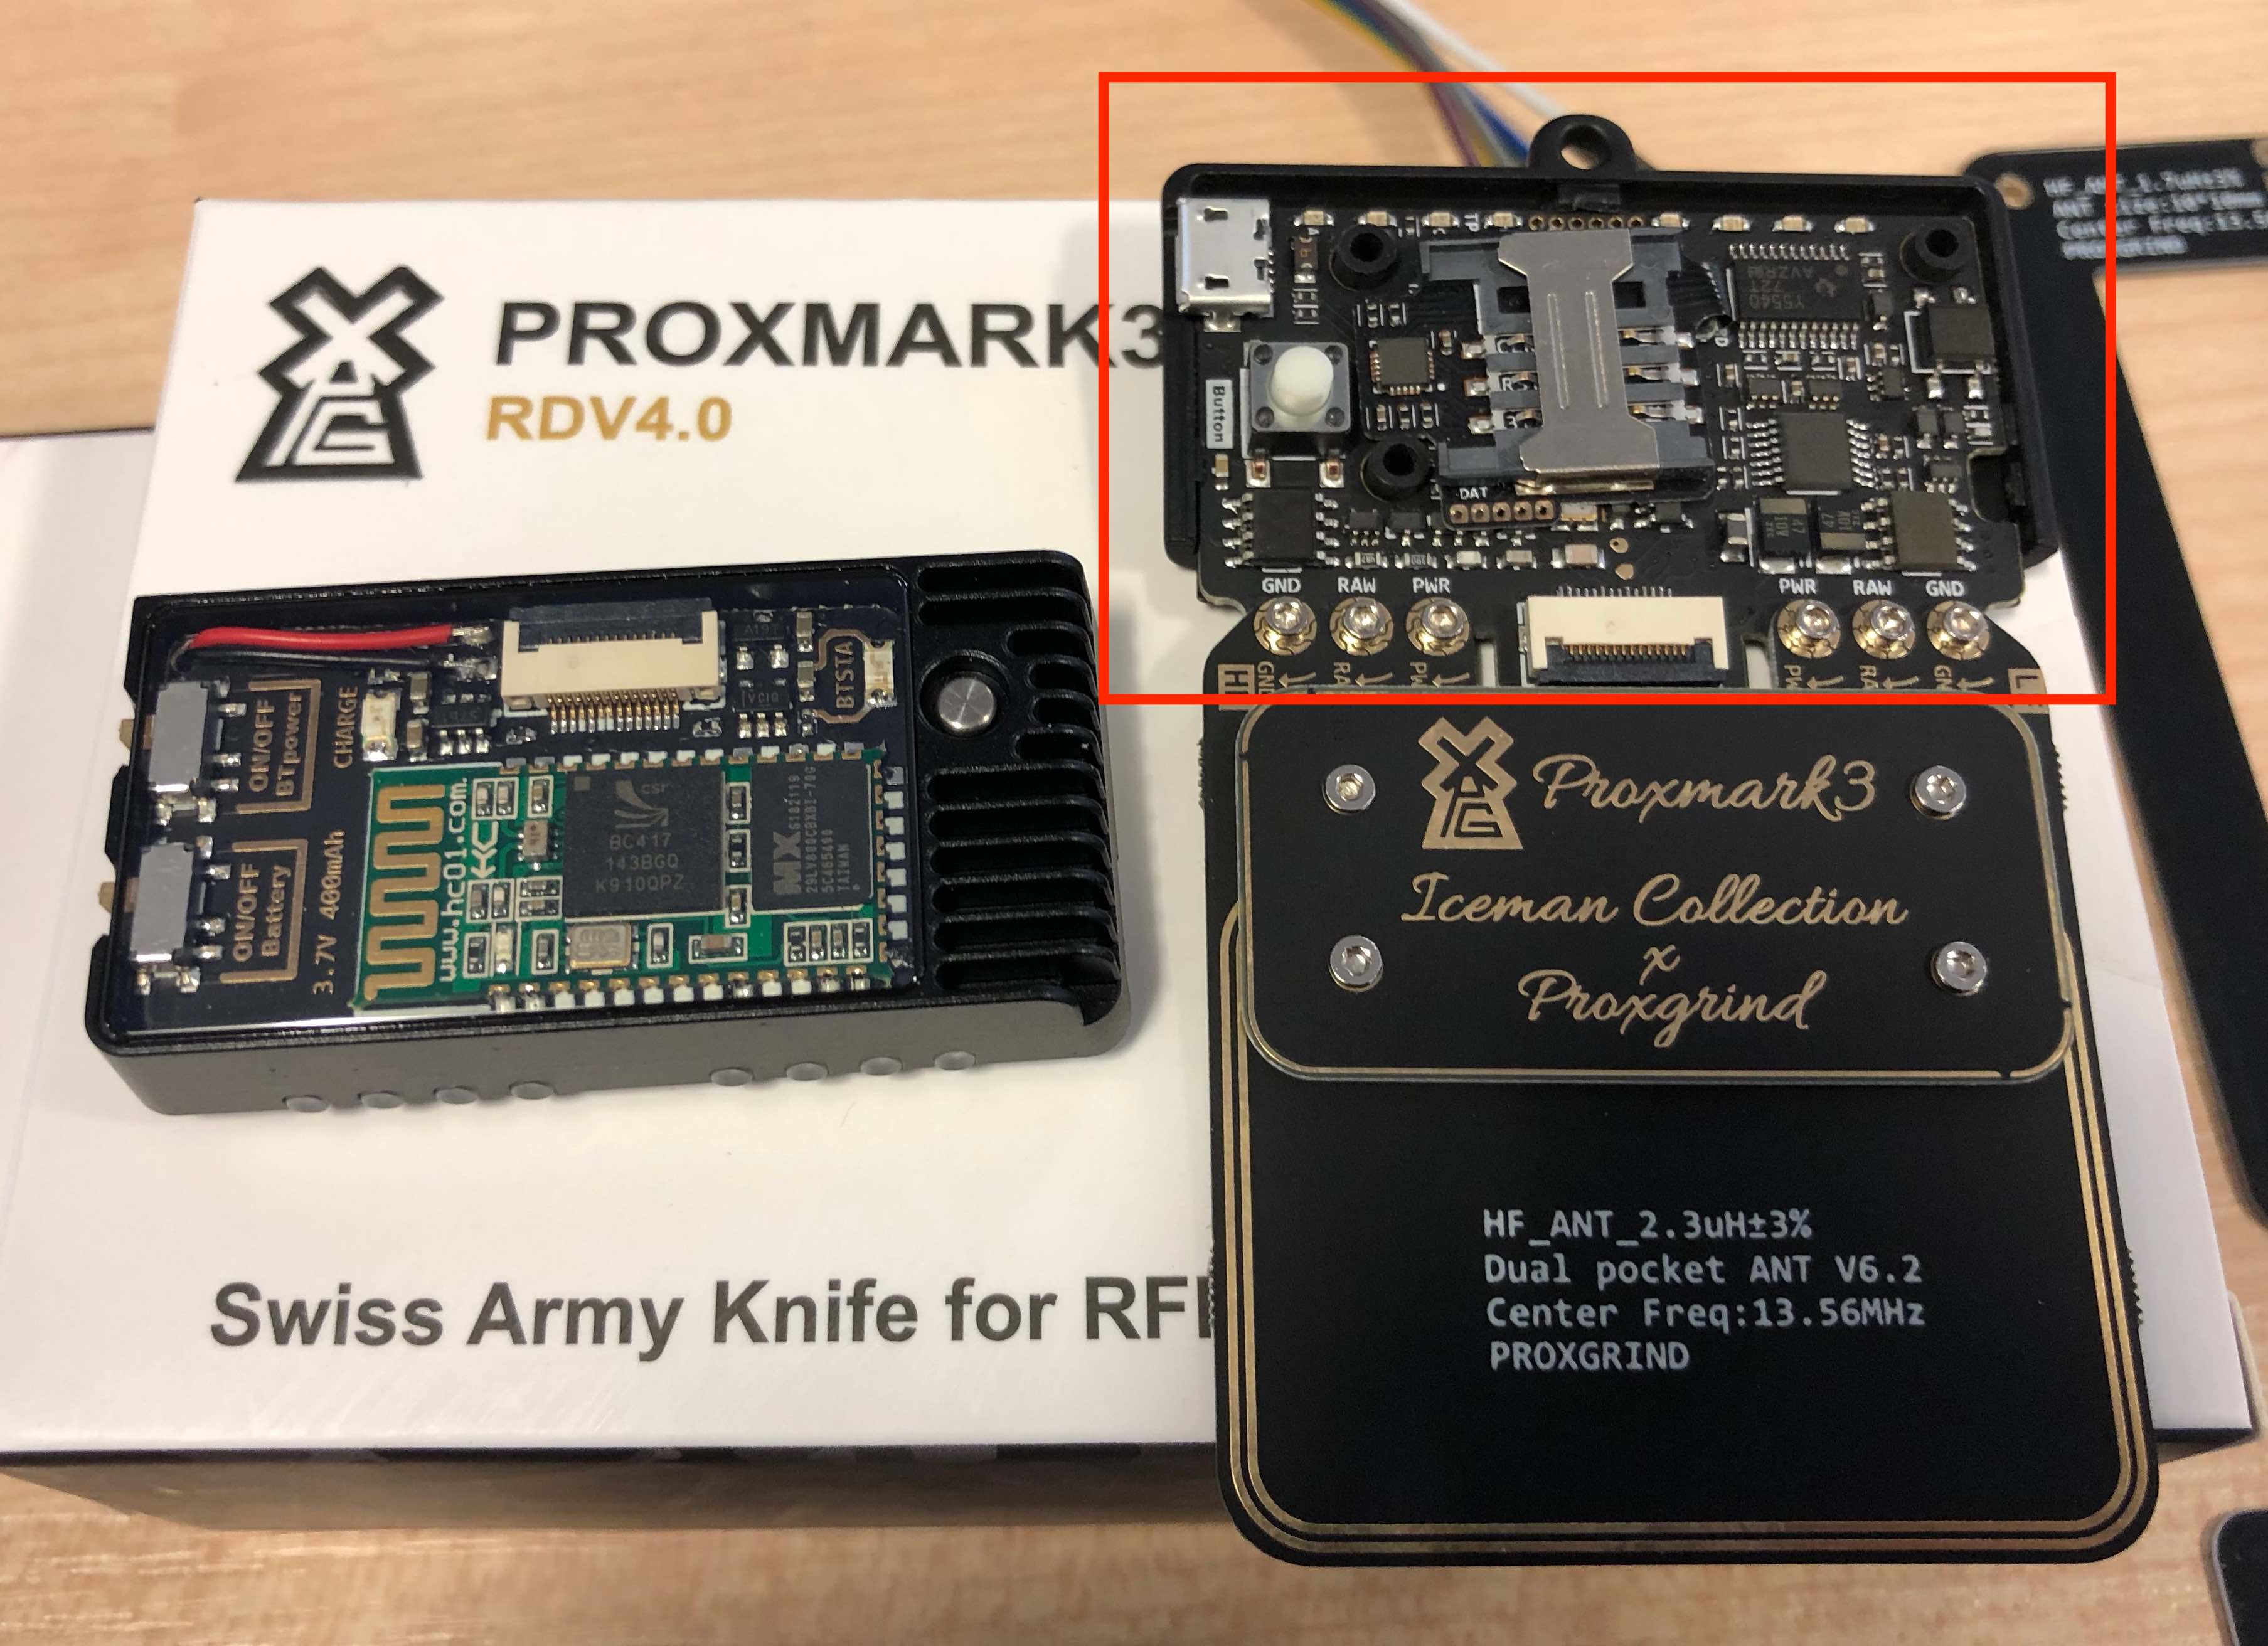 Proxmark RDV4